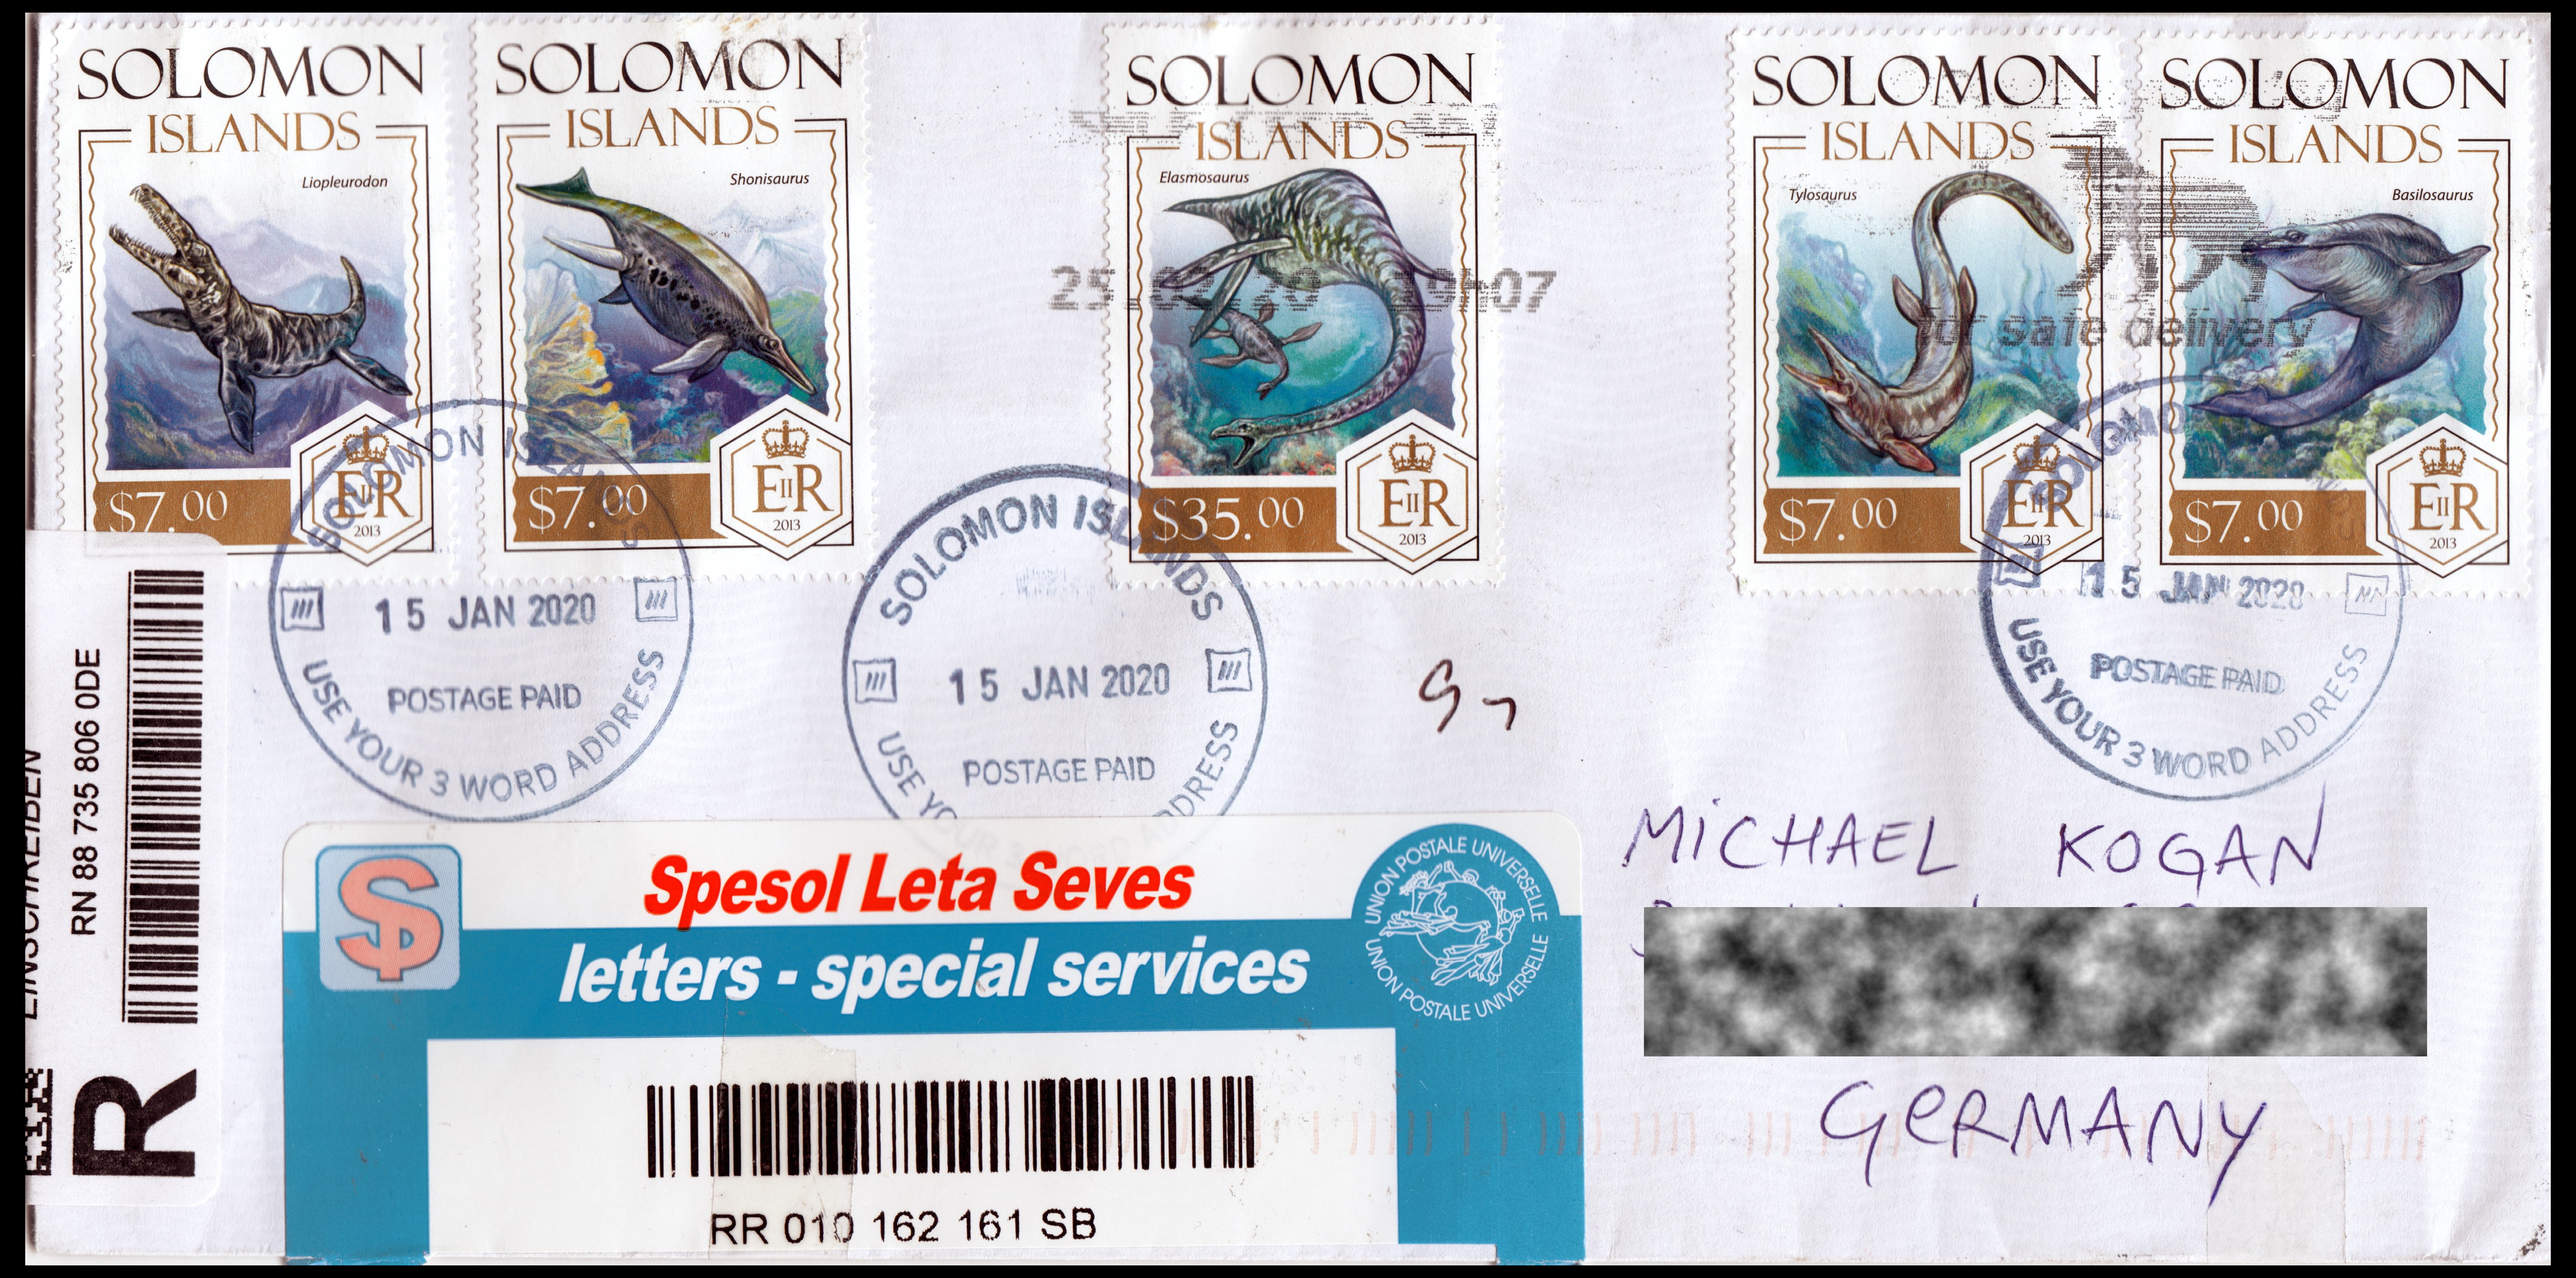 Prehistoroc marine animal stamps on letter of Solomon Islands